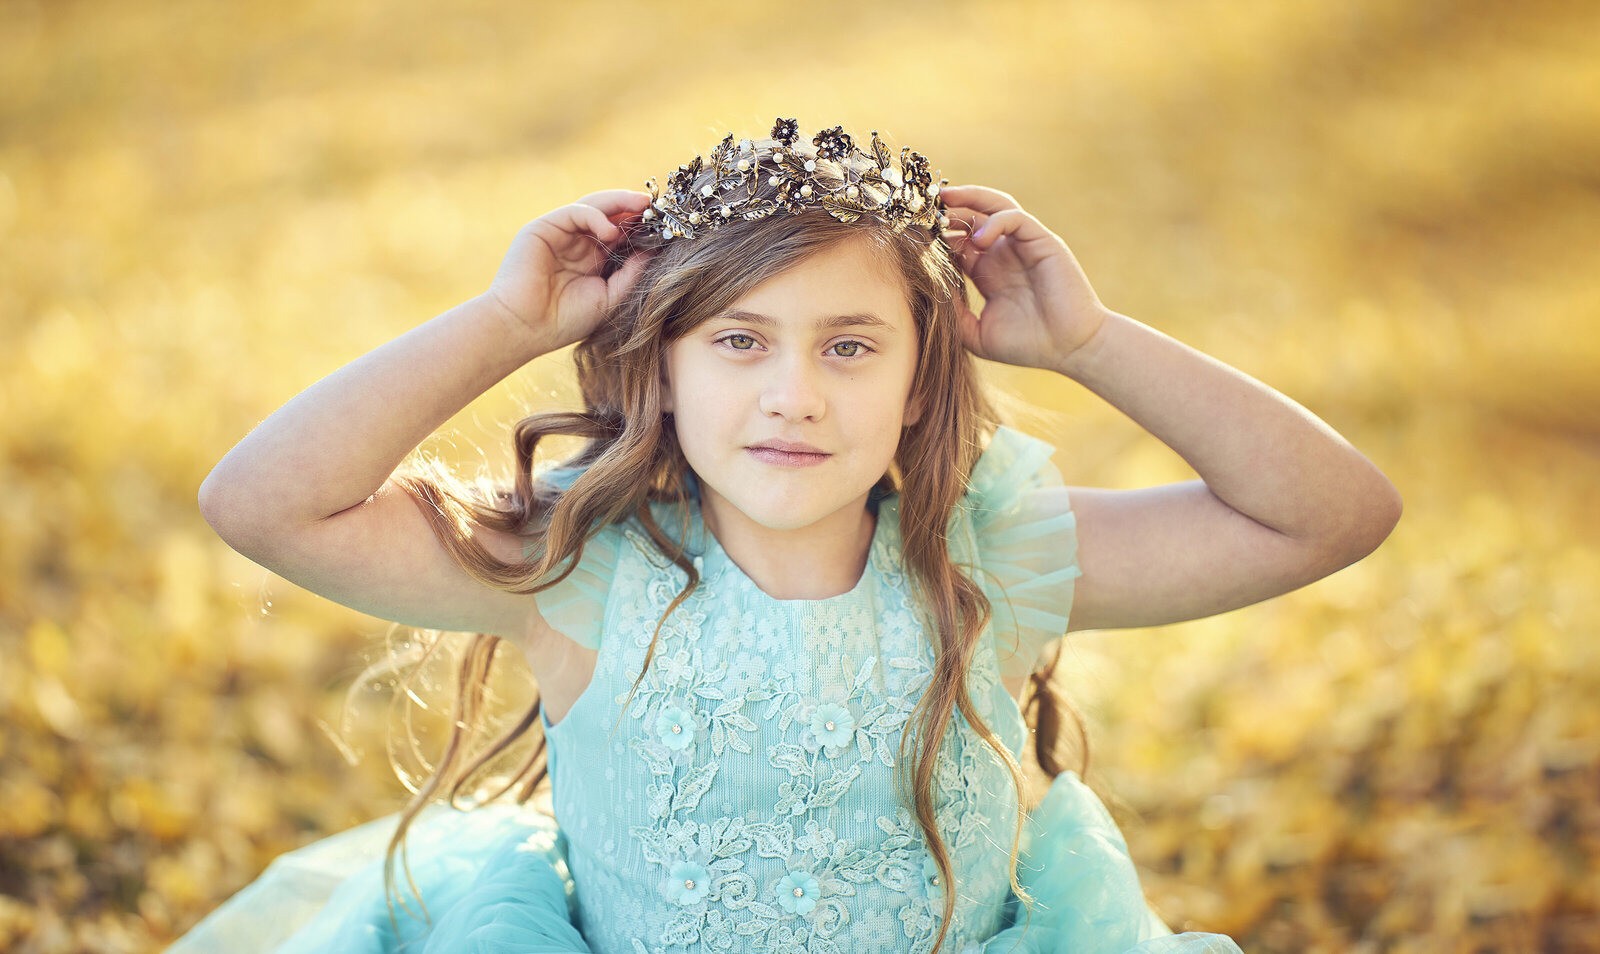 atlanta-best-award-winning-fall-autumn-kids-children-childrens-portraits-princess-session-unicorn-glamour-photography-photographer-twin-rivers-03